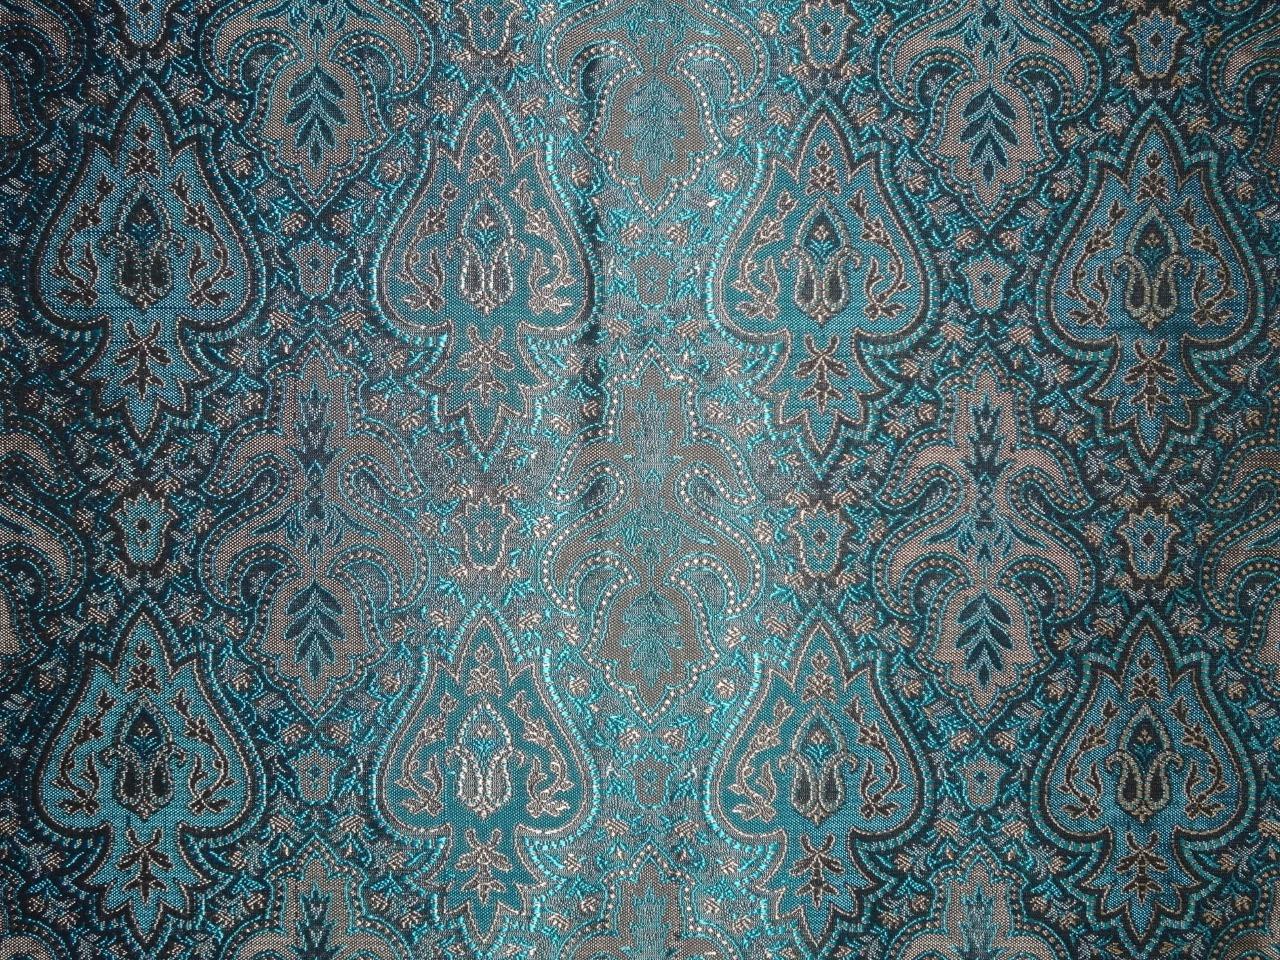 Silk brocade fabric blue, metallic gold and black color 44" wide BRO533[1]